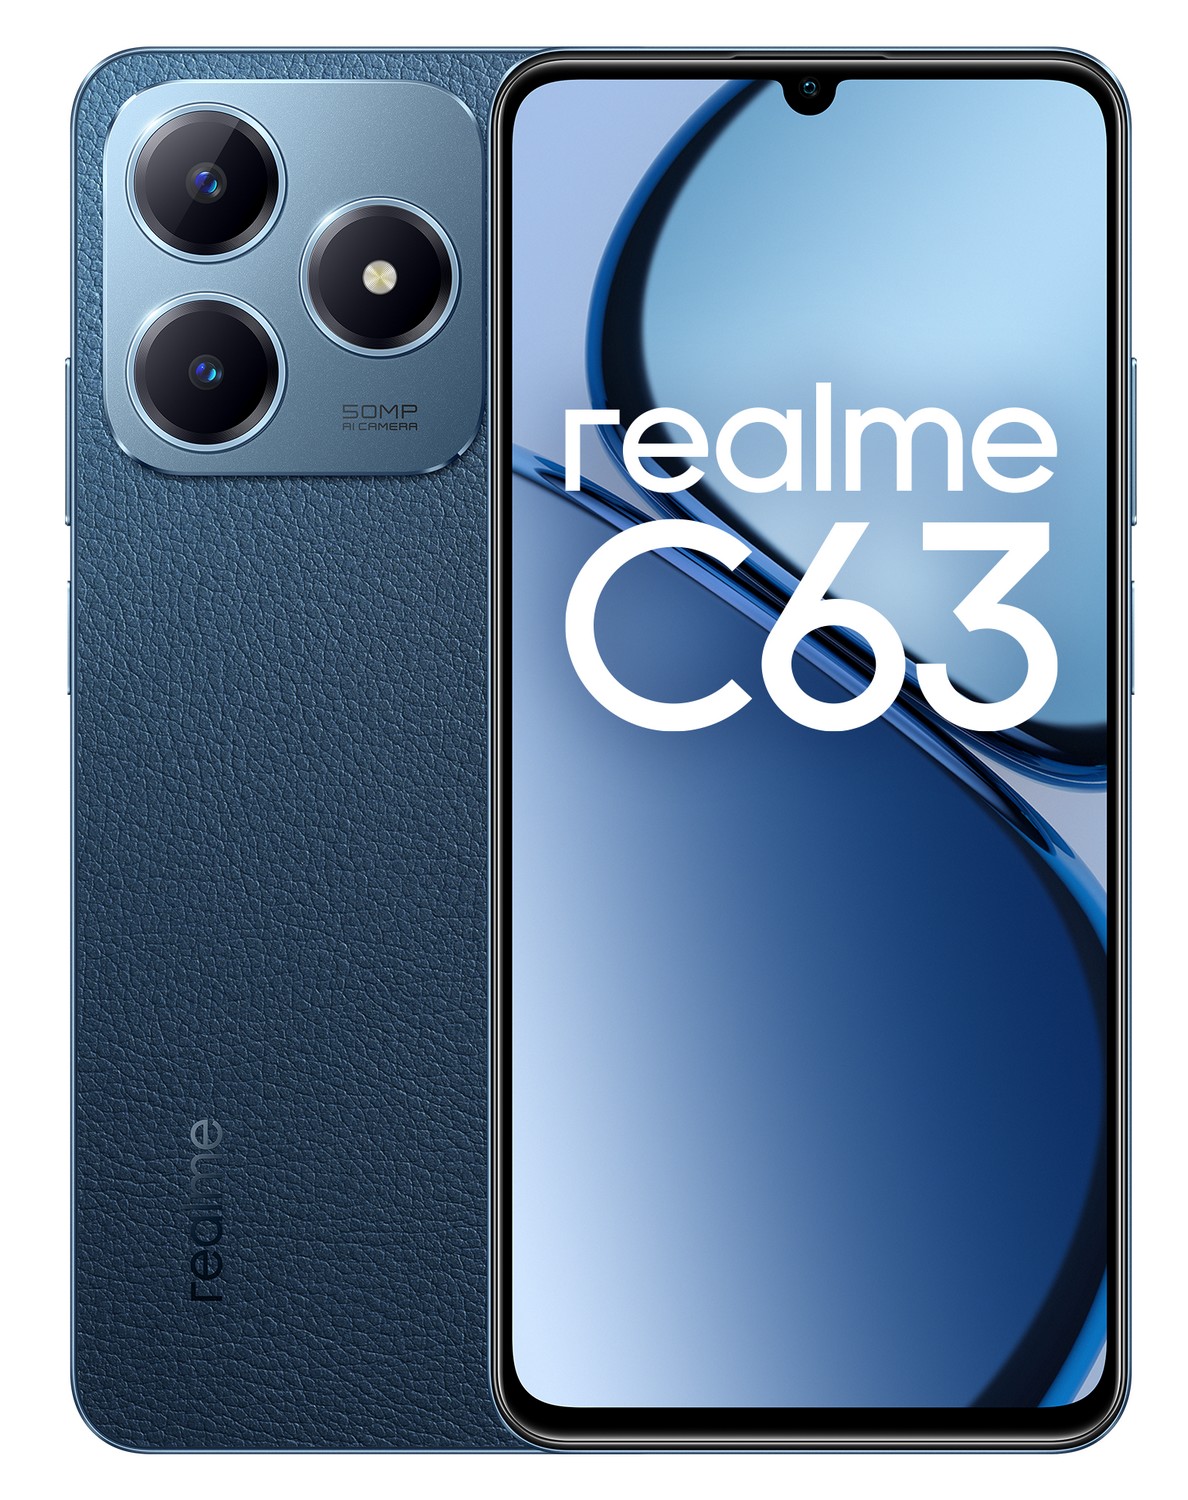 REALME C63 LEATHER BLUE 6.75